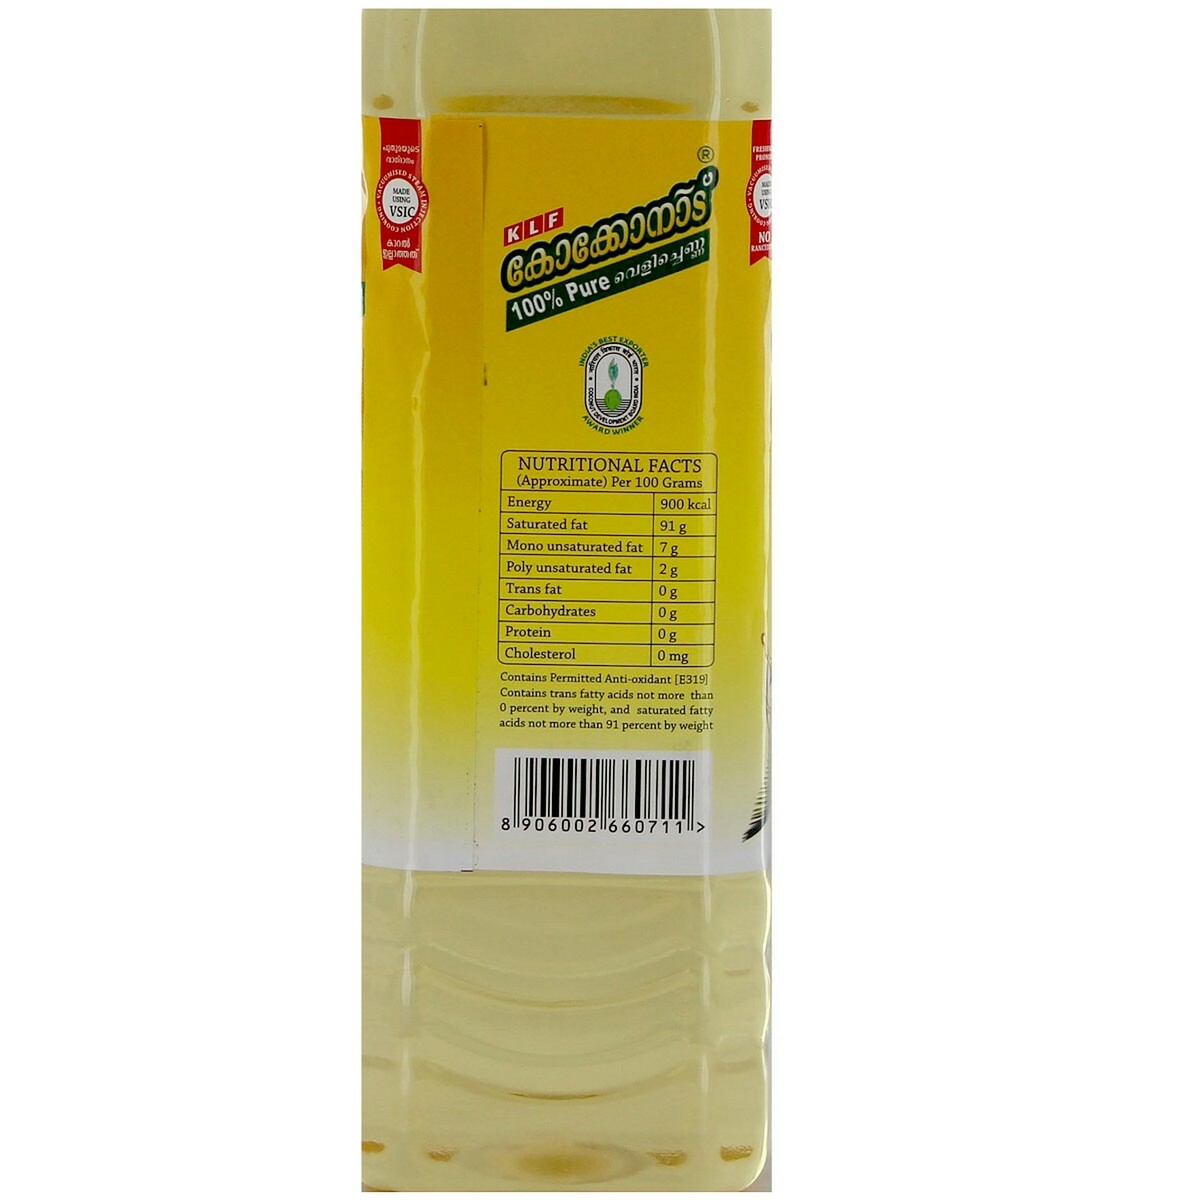 KLF Coconad Coconut Oil Bottle 1 Liter